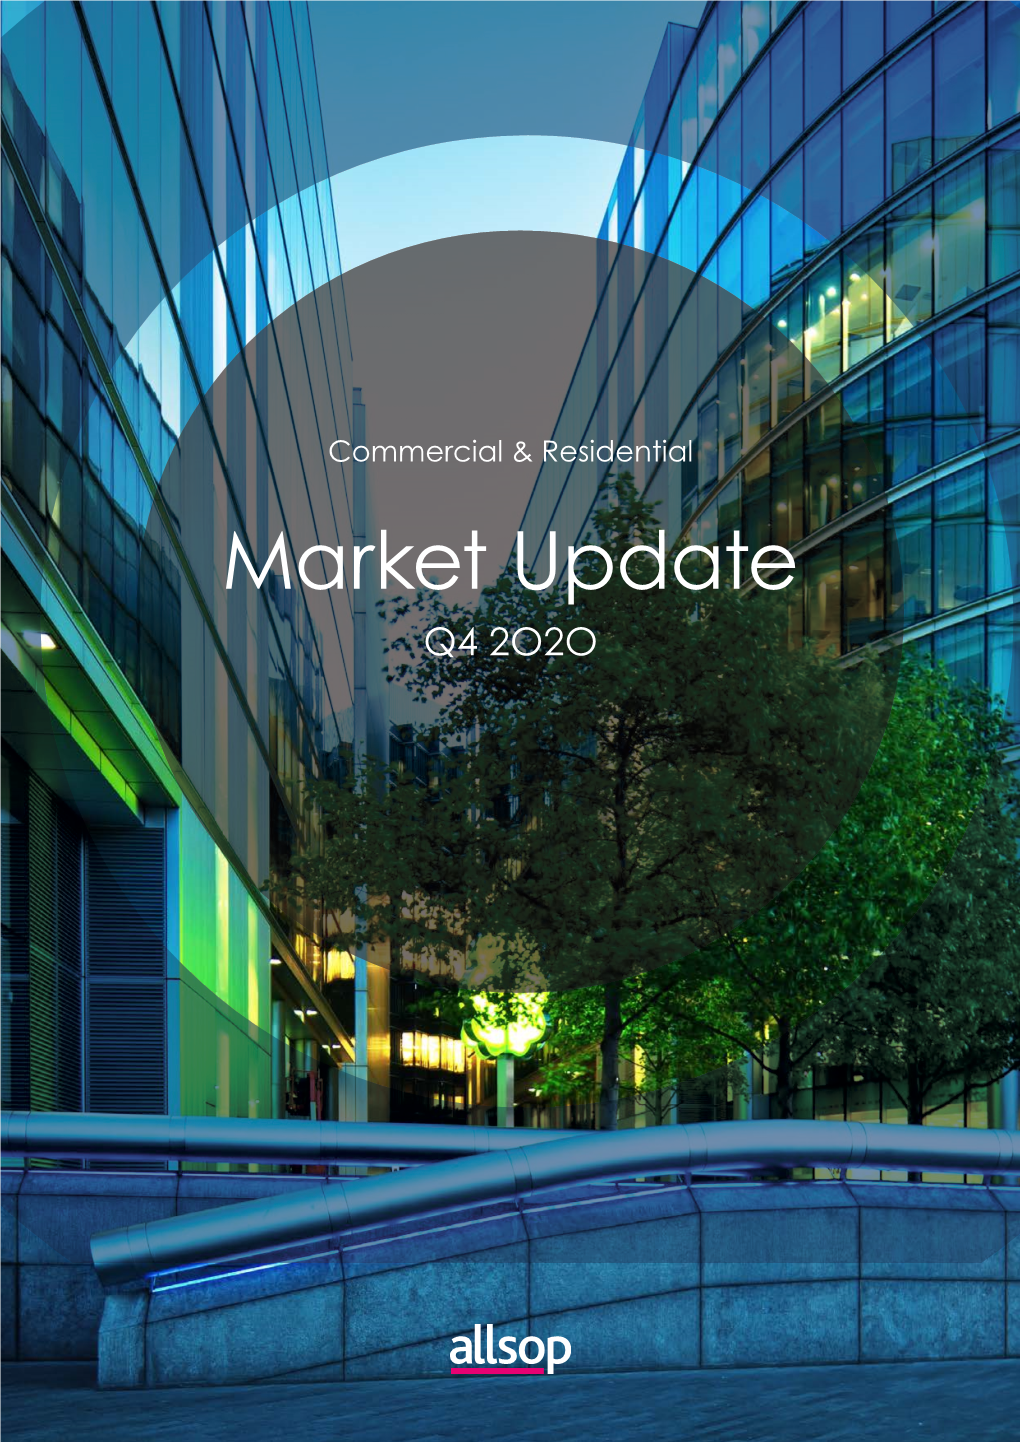 Market Update Q4 2O2O Contents